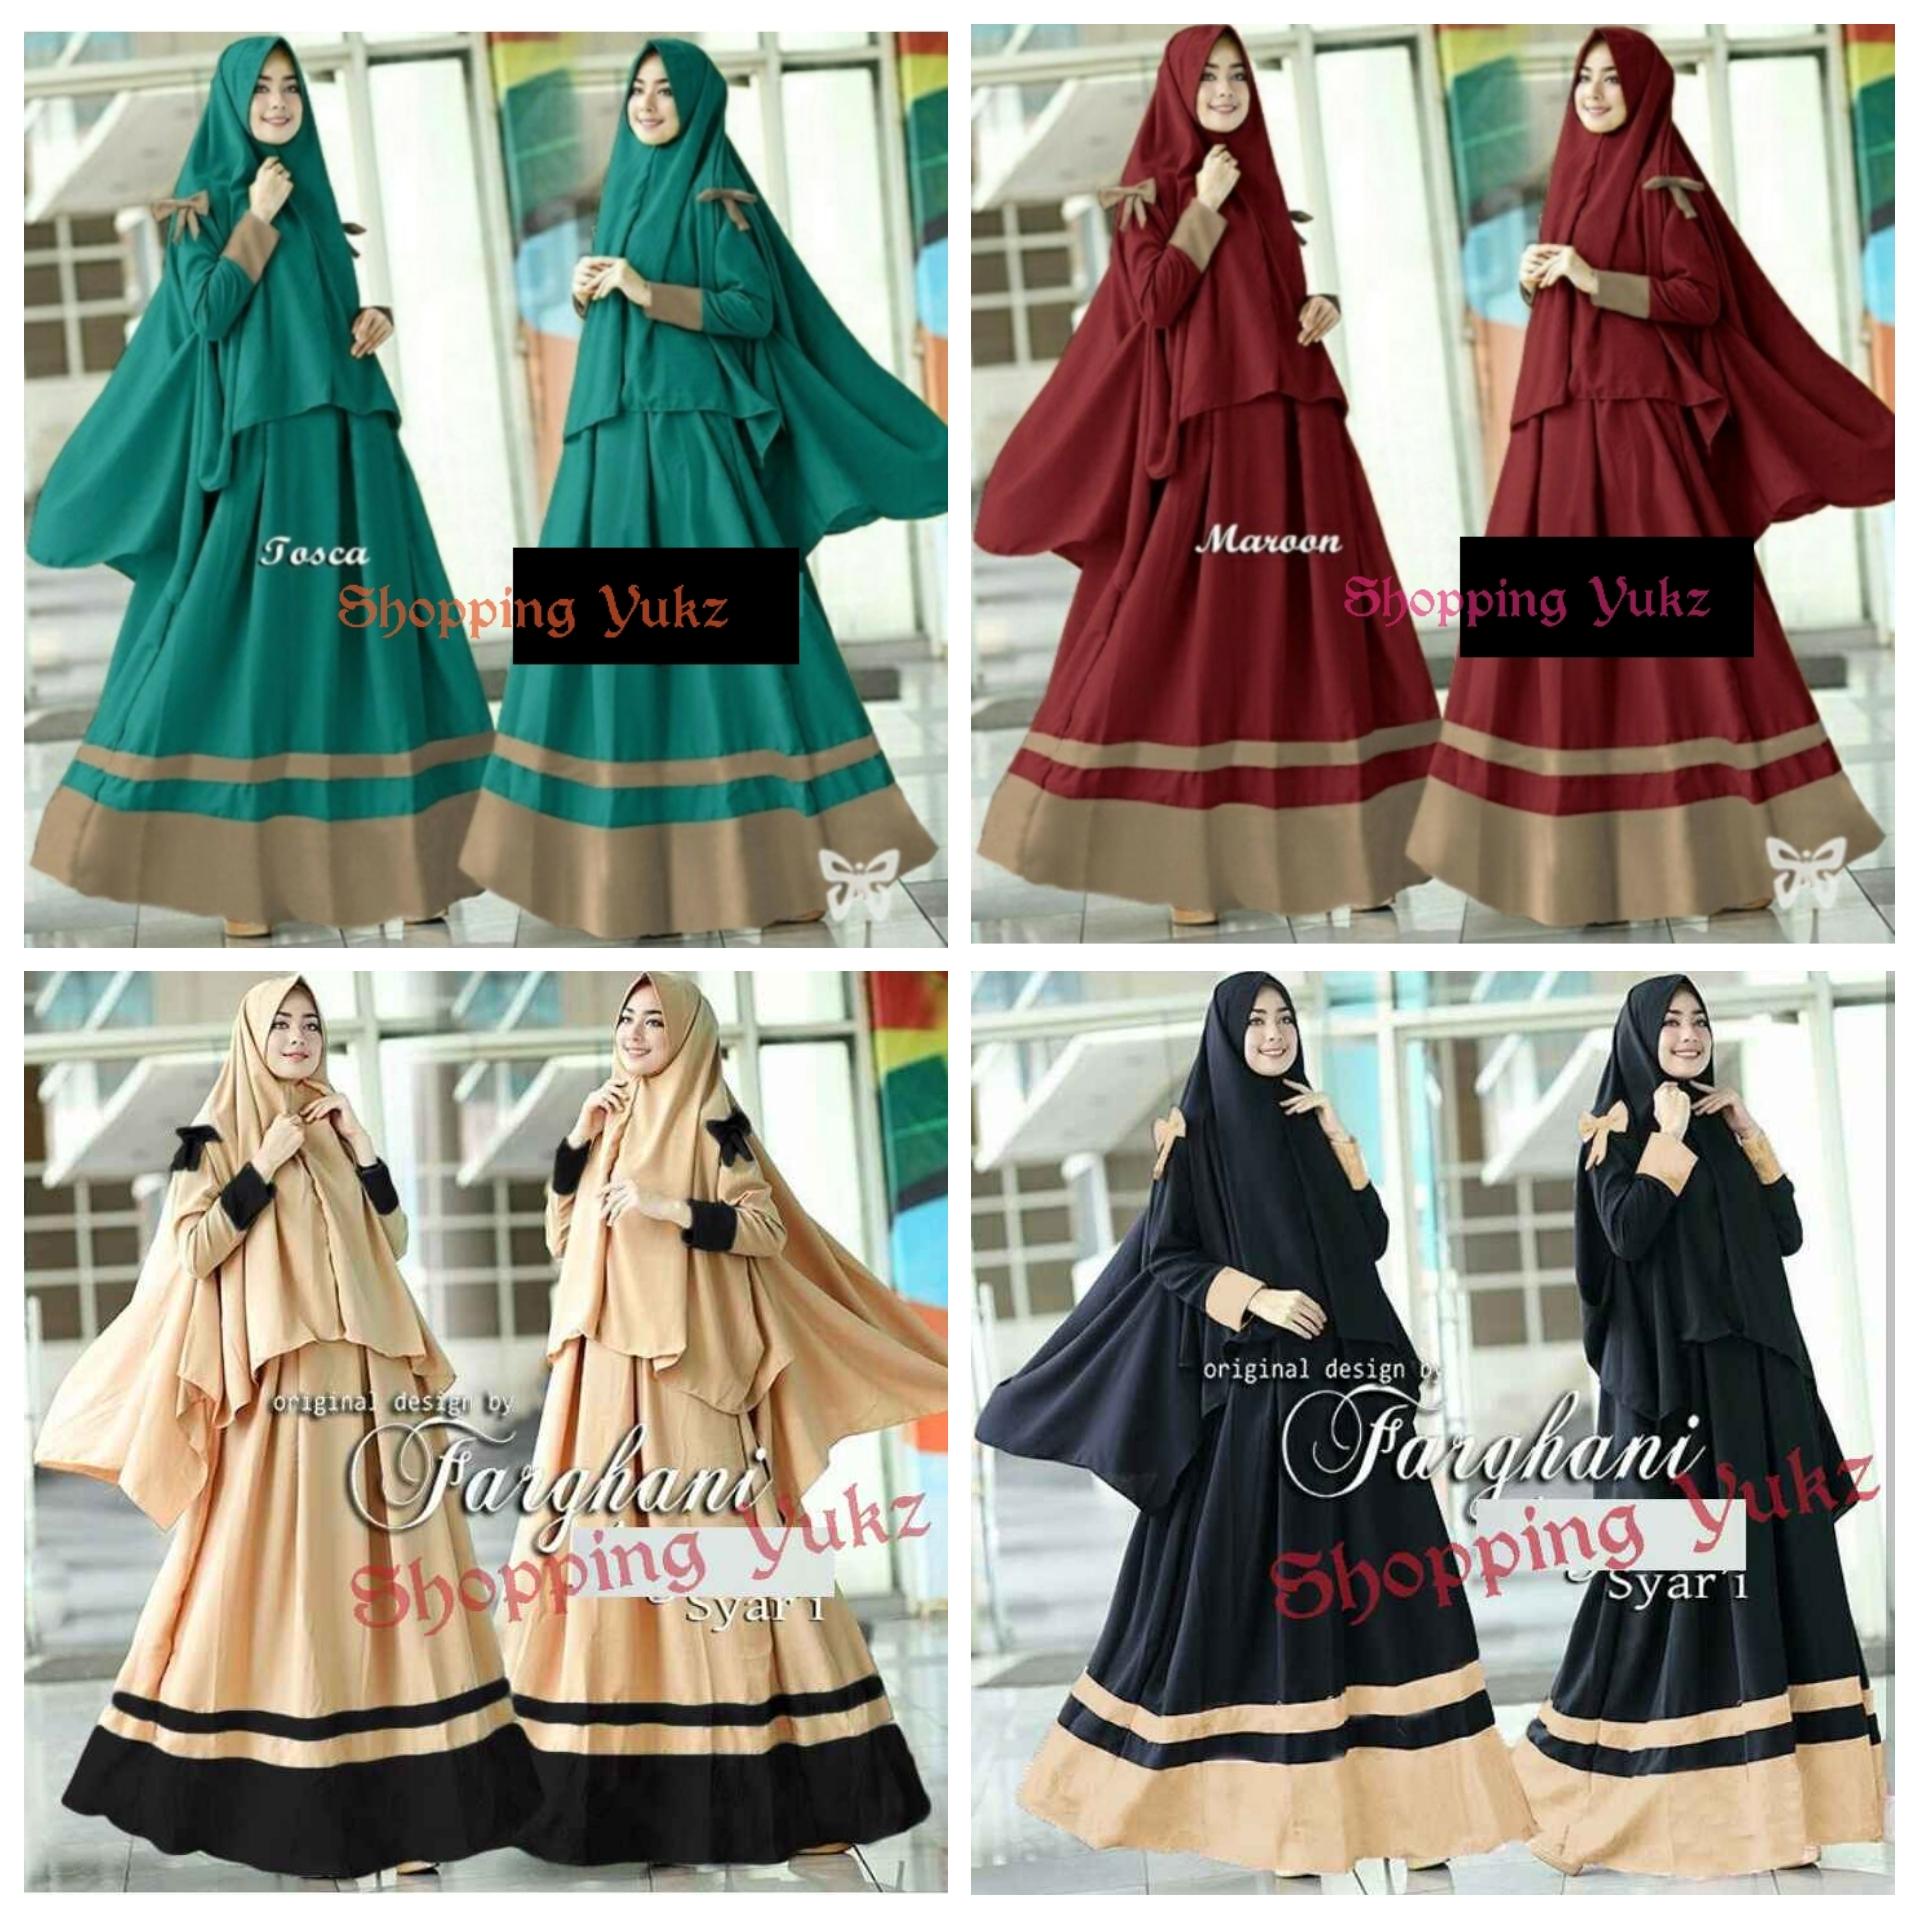 Shopping Yukz Baju Gamis Maxi Dress Muslim Wanita Syari 2in1 AIRYA ( Dapat Jilbab ) / Dress Muslim / Gamis Wanita / Baju Muslim / Hijab Muslim / Fashion Muslim / Syar'i Muslim / Maxi Dress Lengan Panjang / Gamis Modern